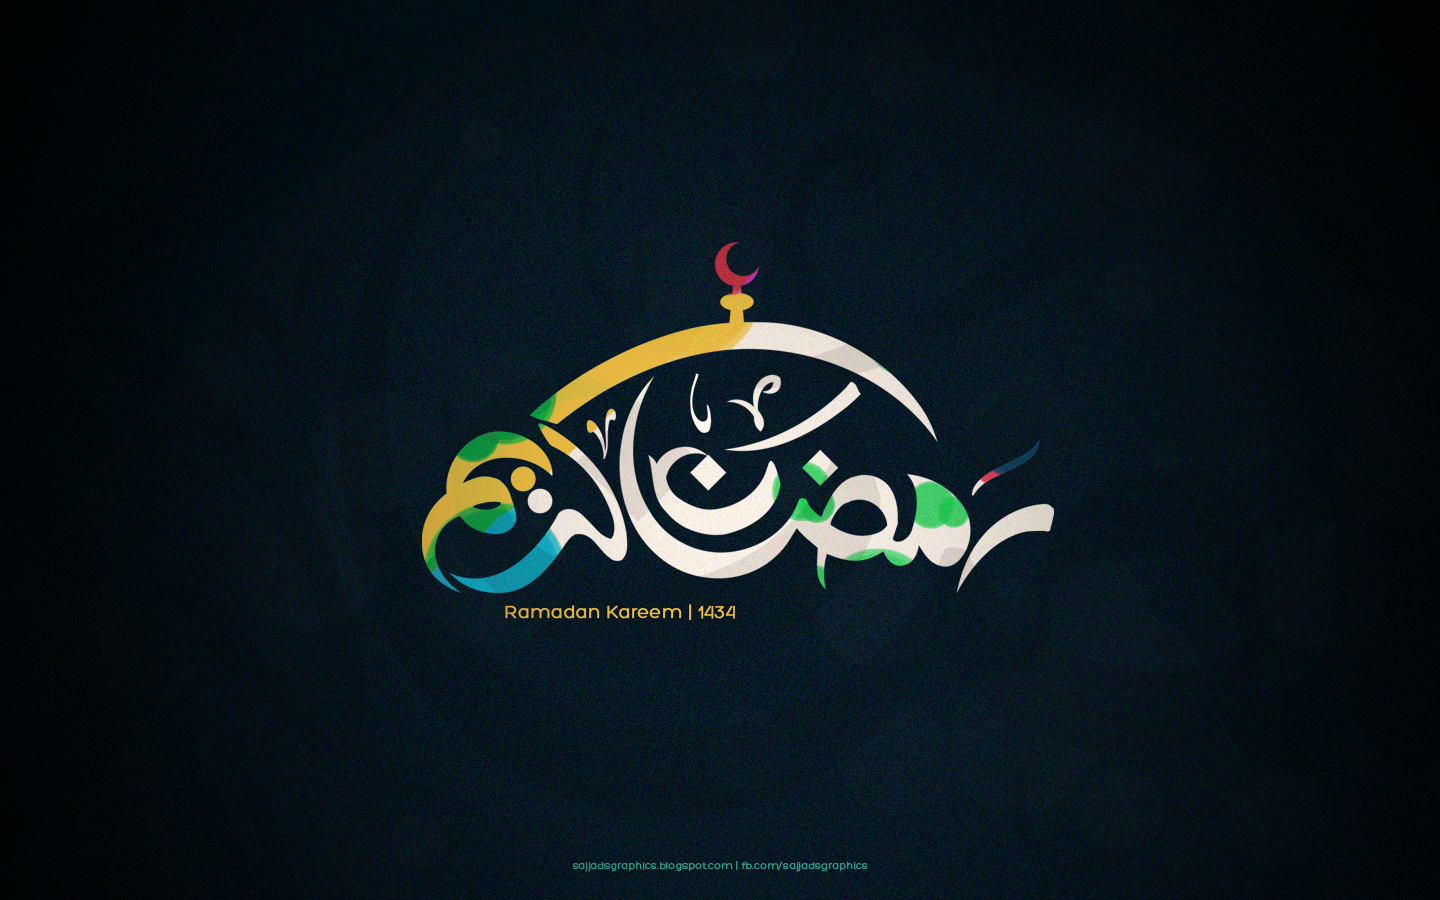 Обои в стиле рамадан. Рамадан каллиграфия. Ramadan Kareem. Рамадан лого. Рамадан узоры.